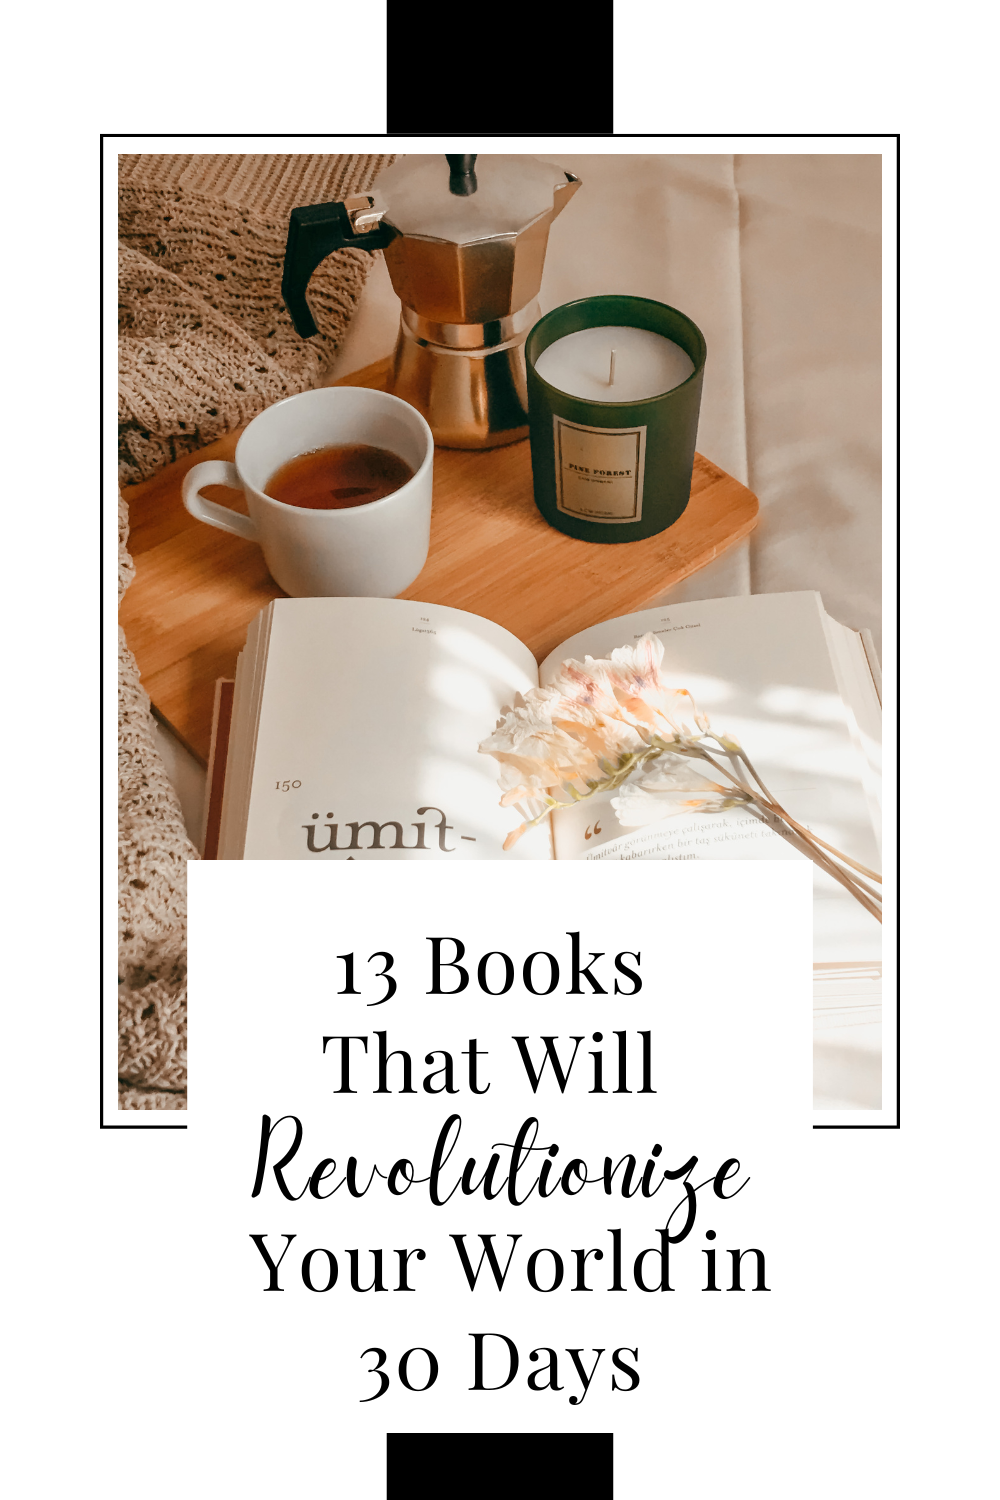 13 Books That Will Revolutionize Your World in 30 Days